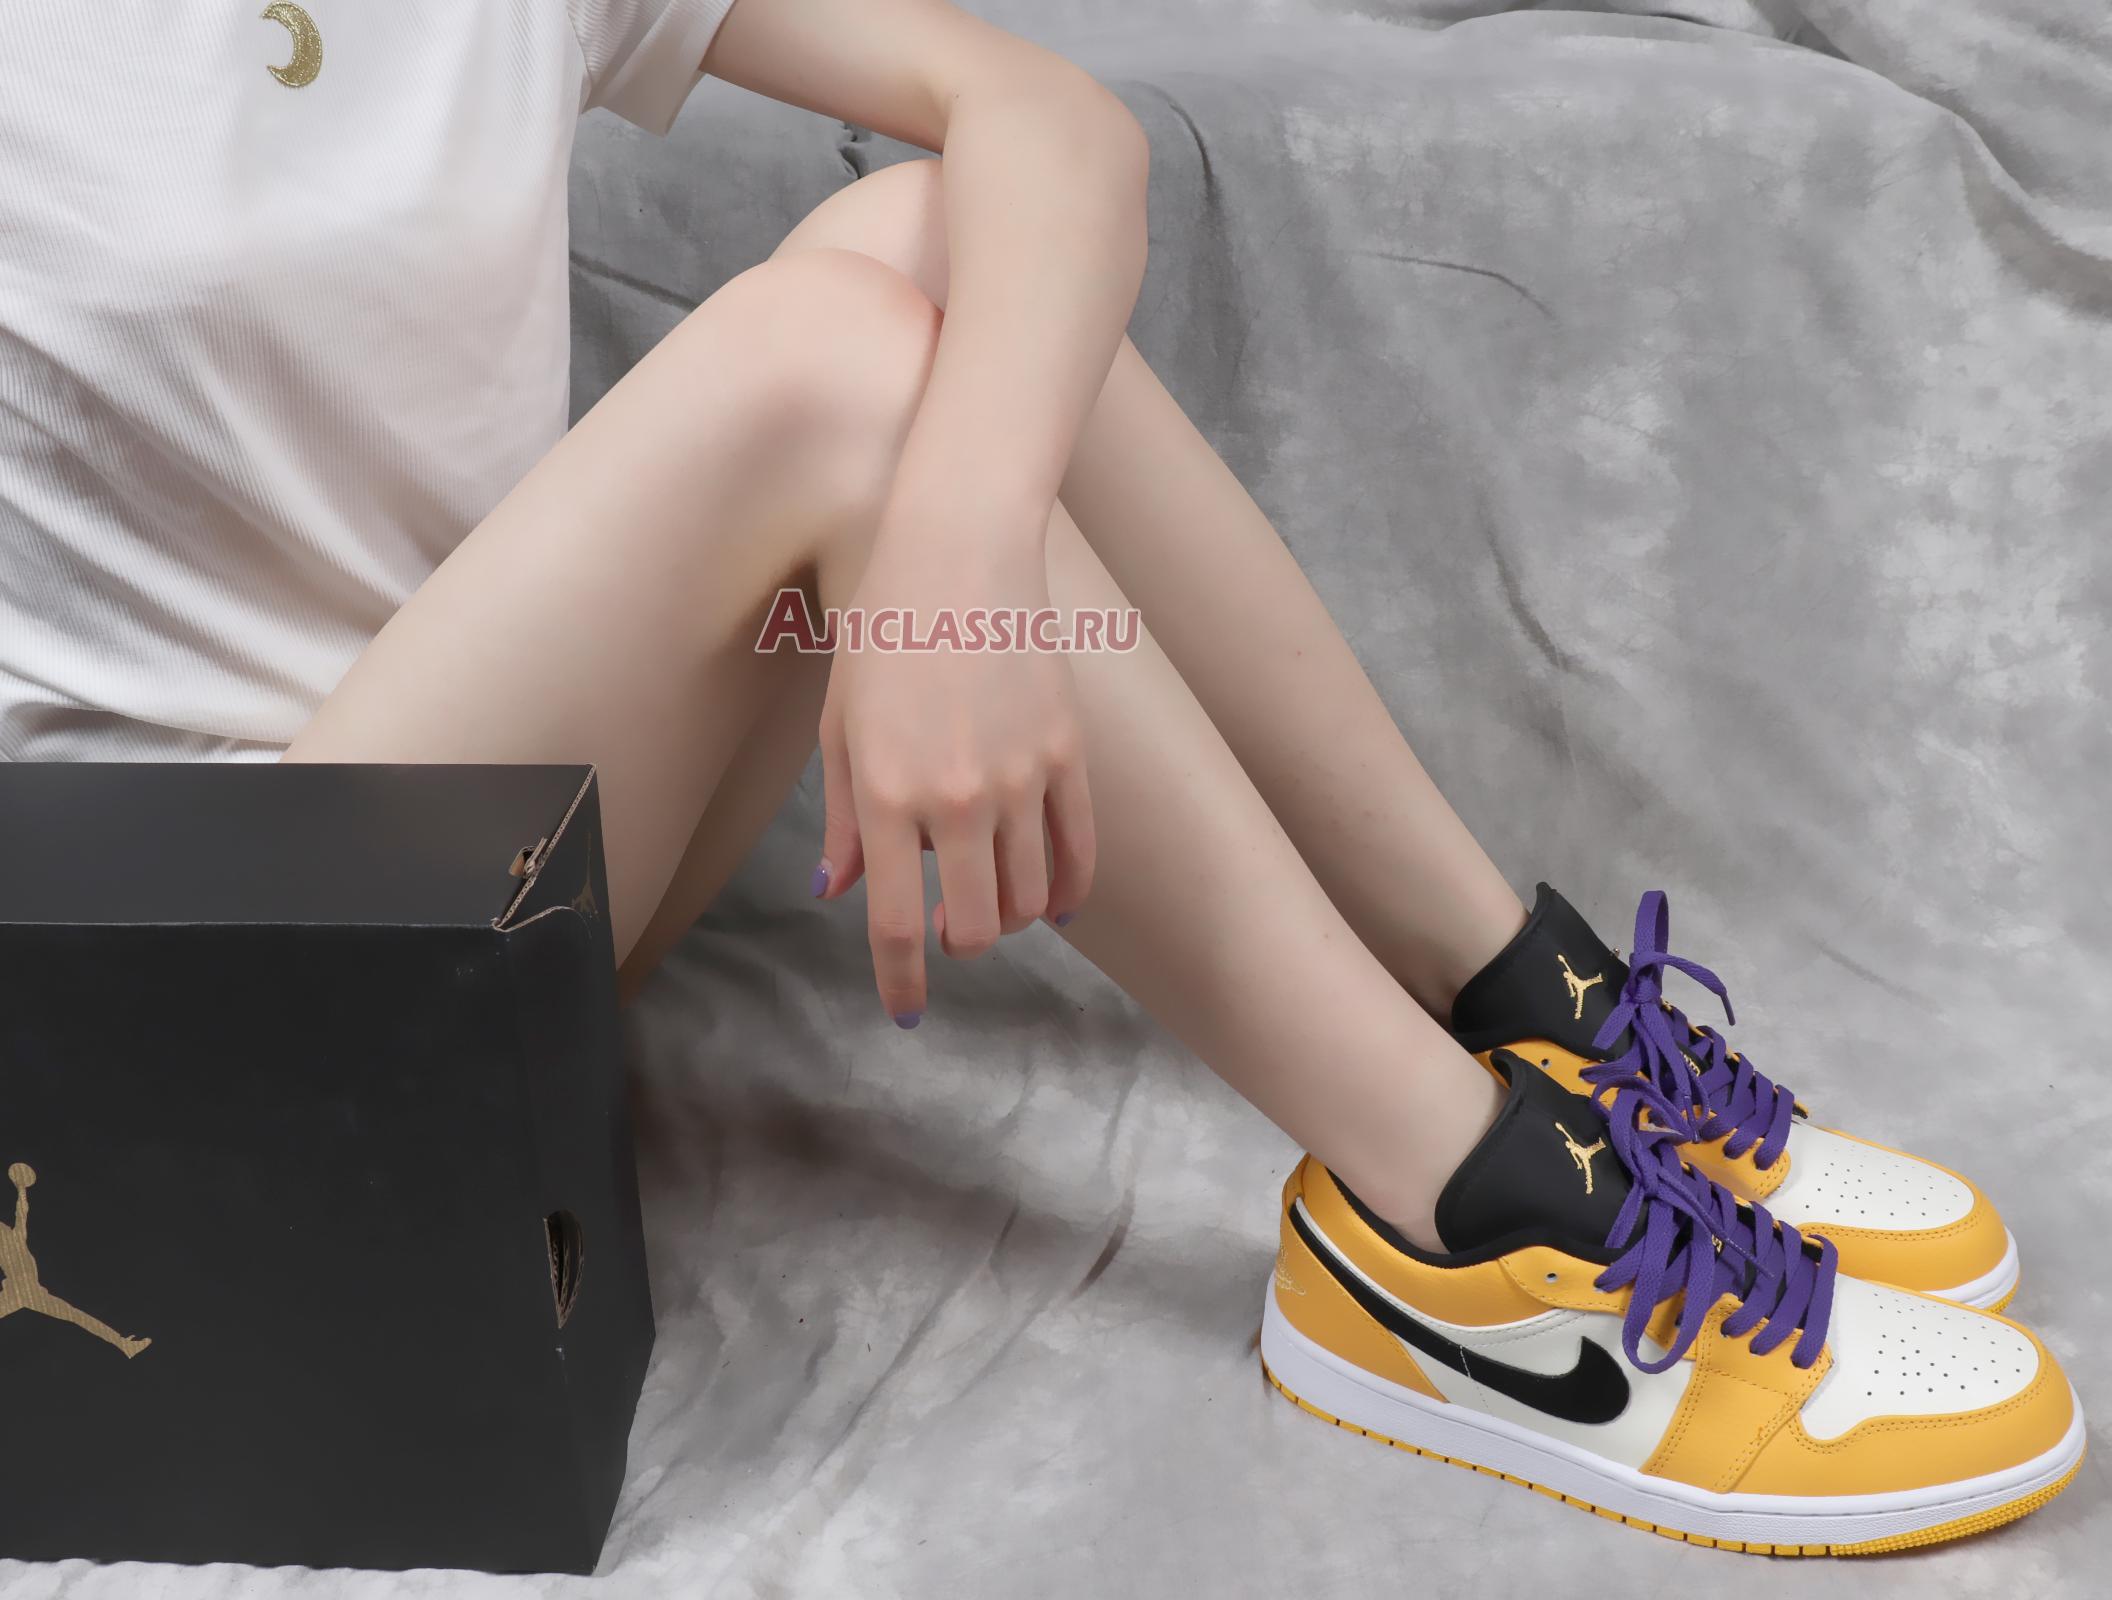 Air Jordan 1 Low Lakers 553558-700 University Gold/Pale Ivory-Court Purple-Black Sneakers